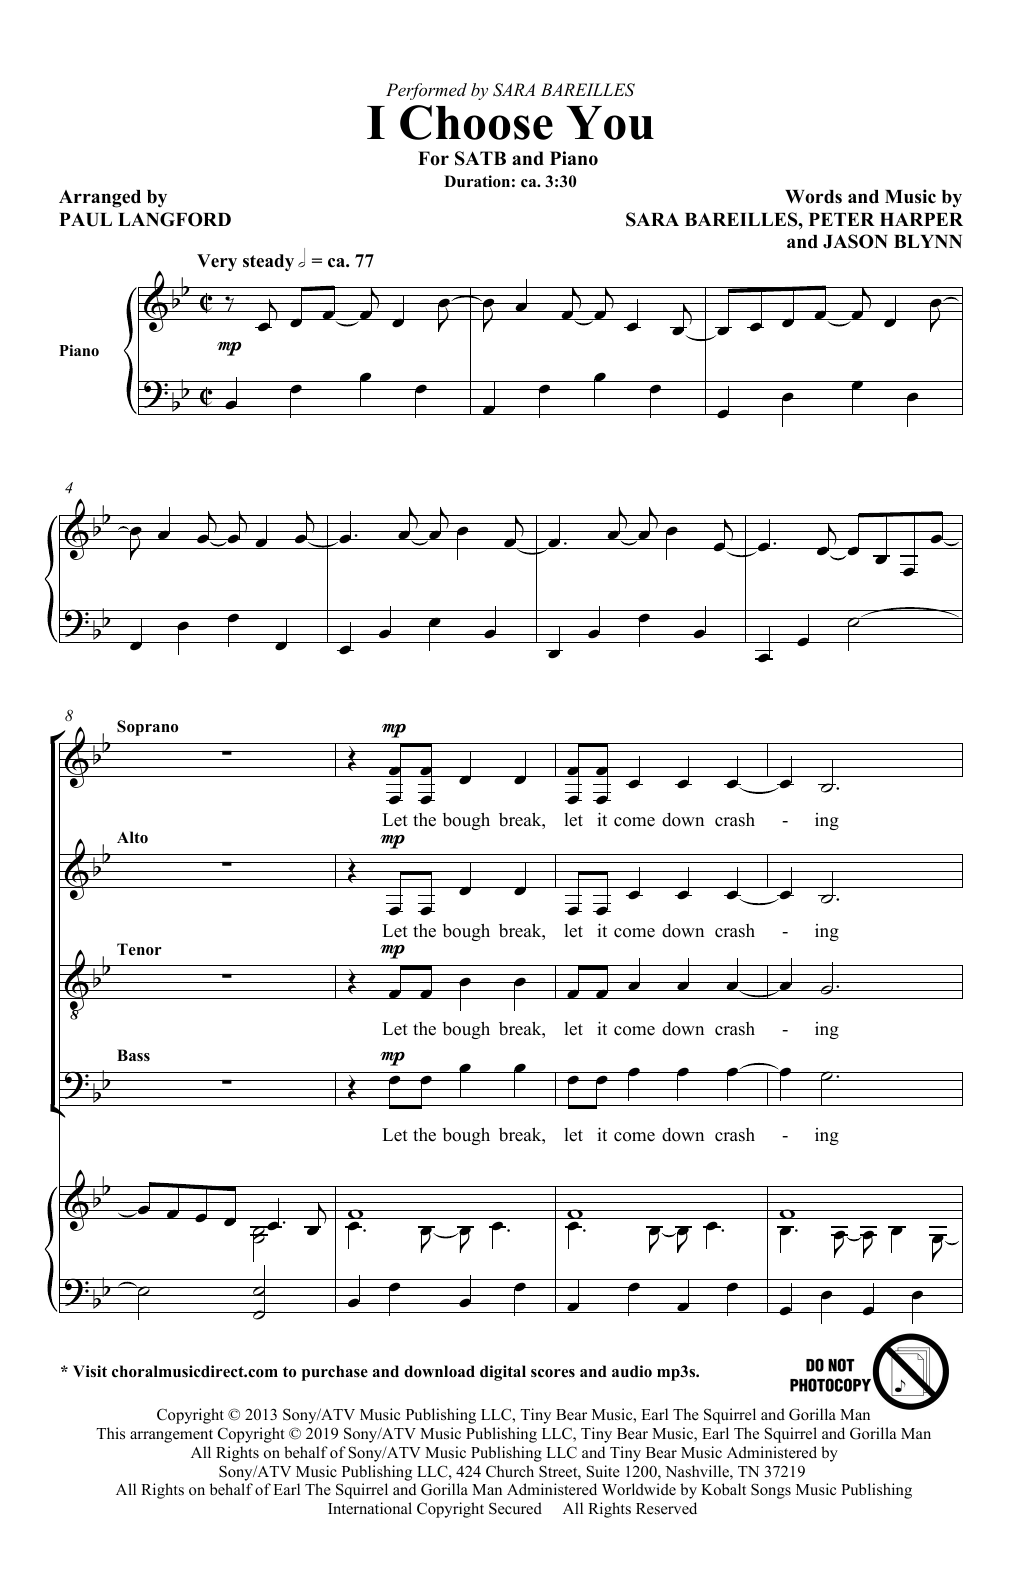 Sara Bareilles I Choose You (arr. Paul Langford) Sheet Music Notes & Chords for SATB Choir - Download or Print PDF